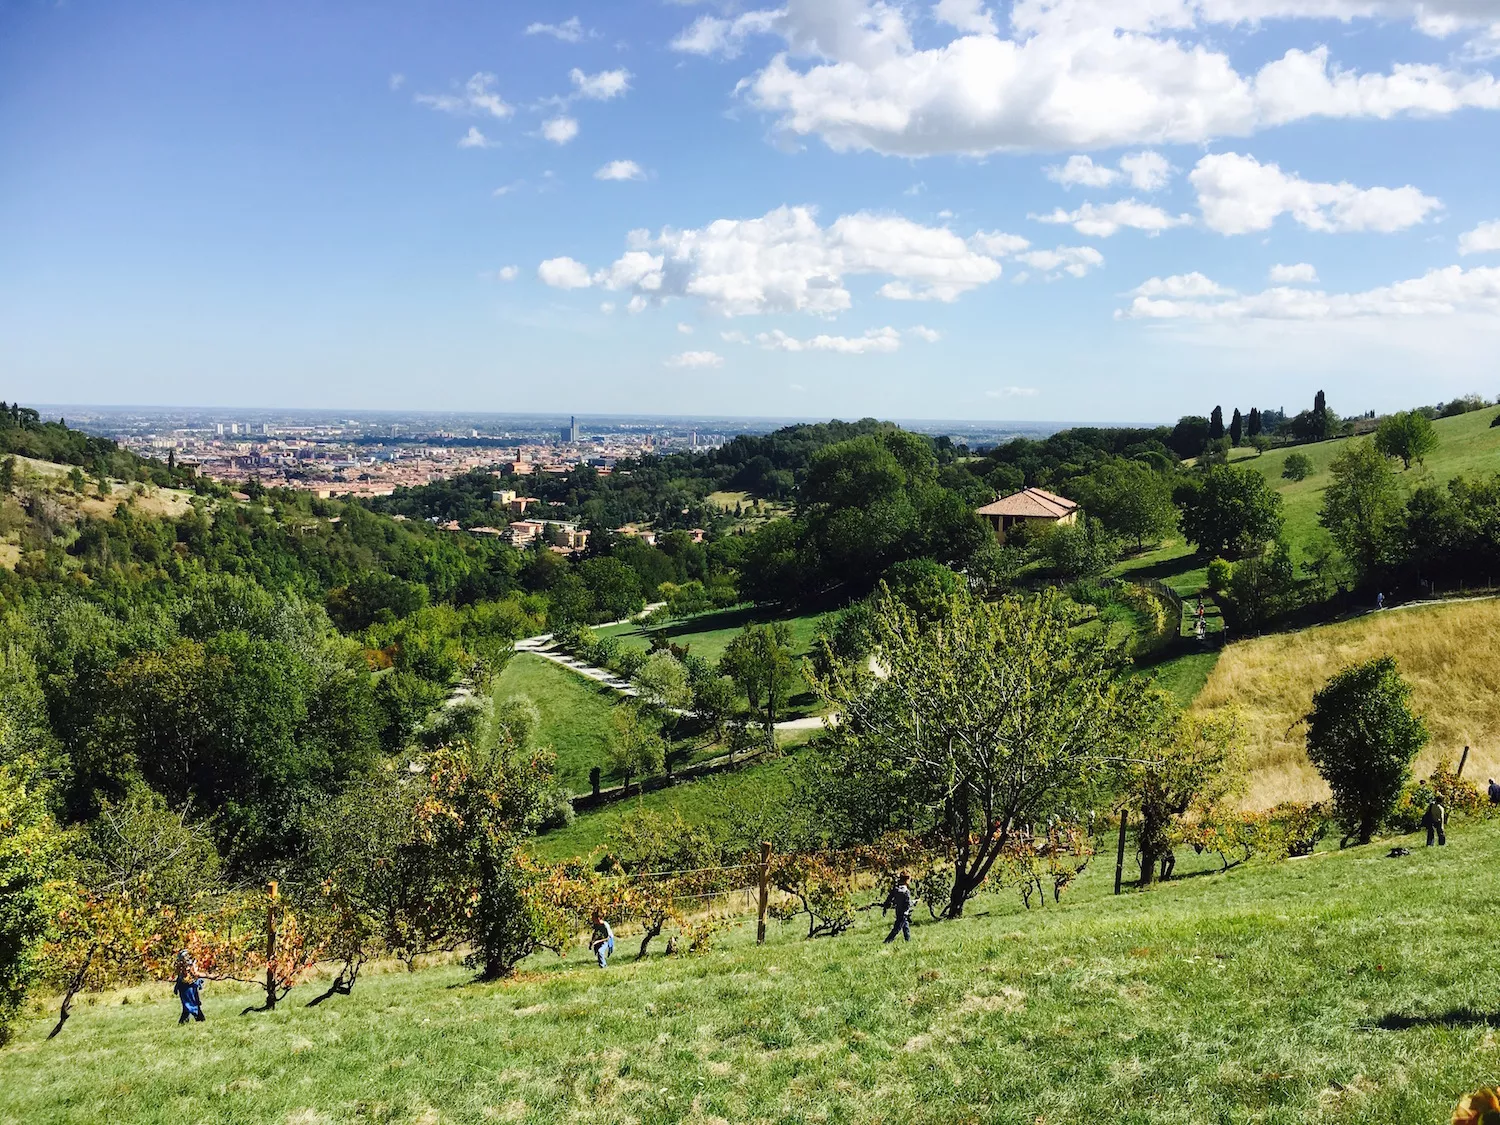 Villa Ghigi in Italy, Europe | Parks - Rated 3.8